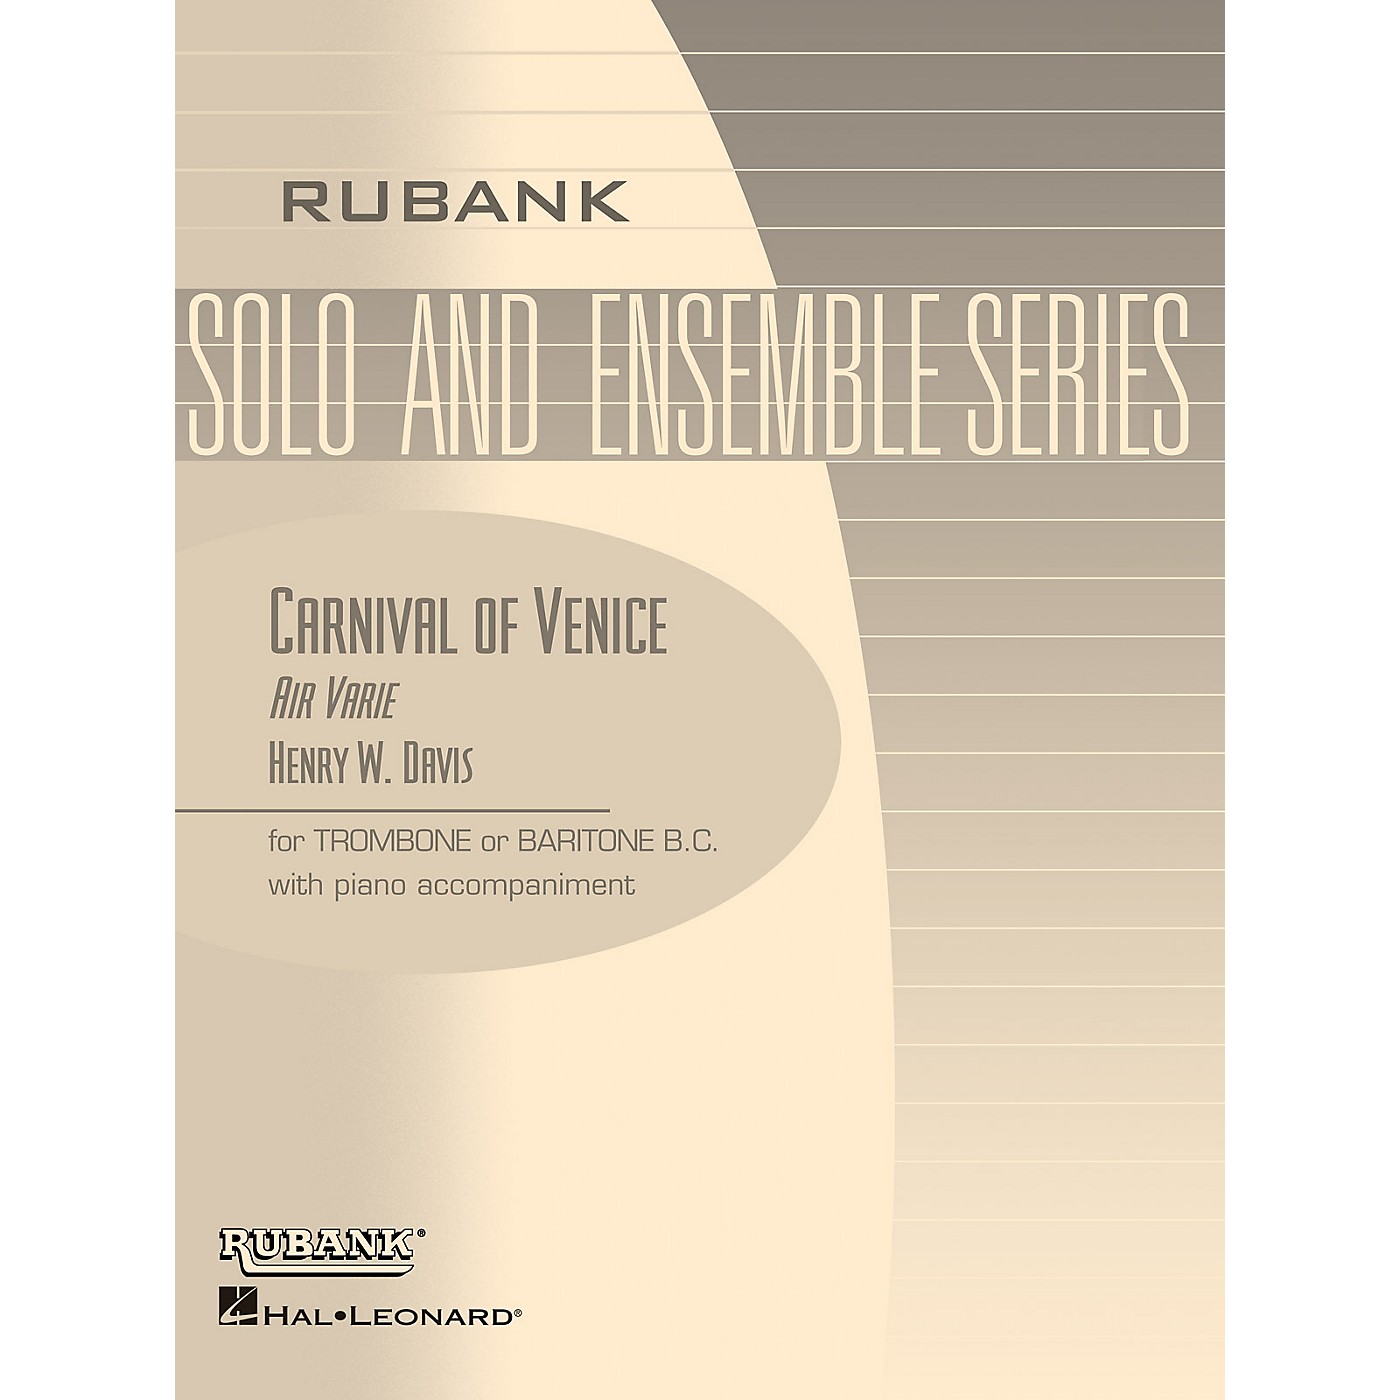 Rubank Publications Carnival of Venice (Air Varie) Rubank Solo/Ensemble Sheet Series thumbnail